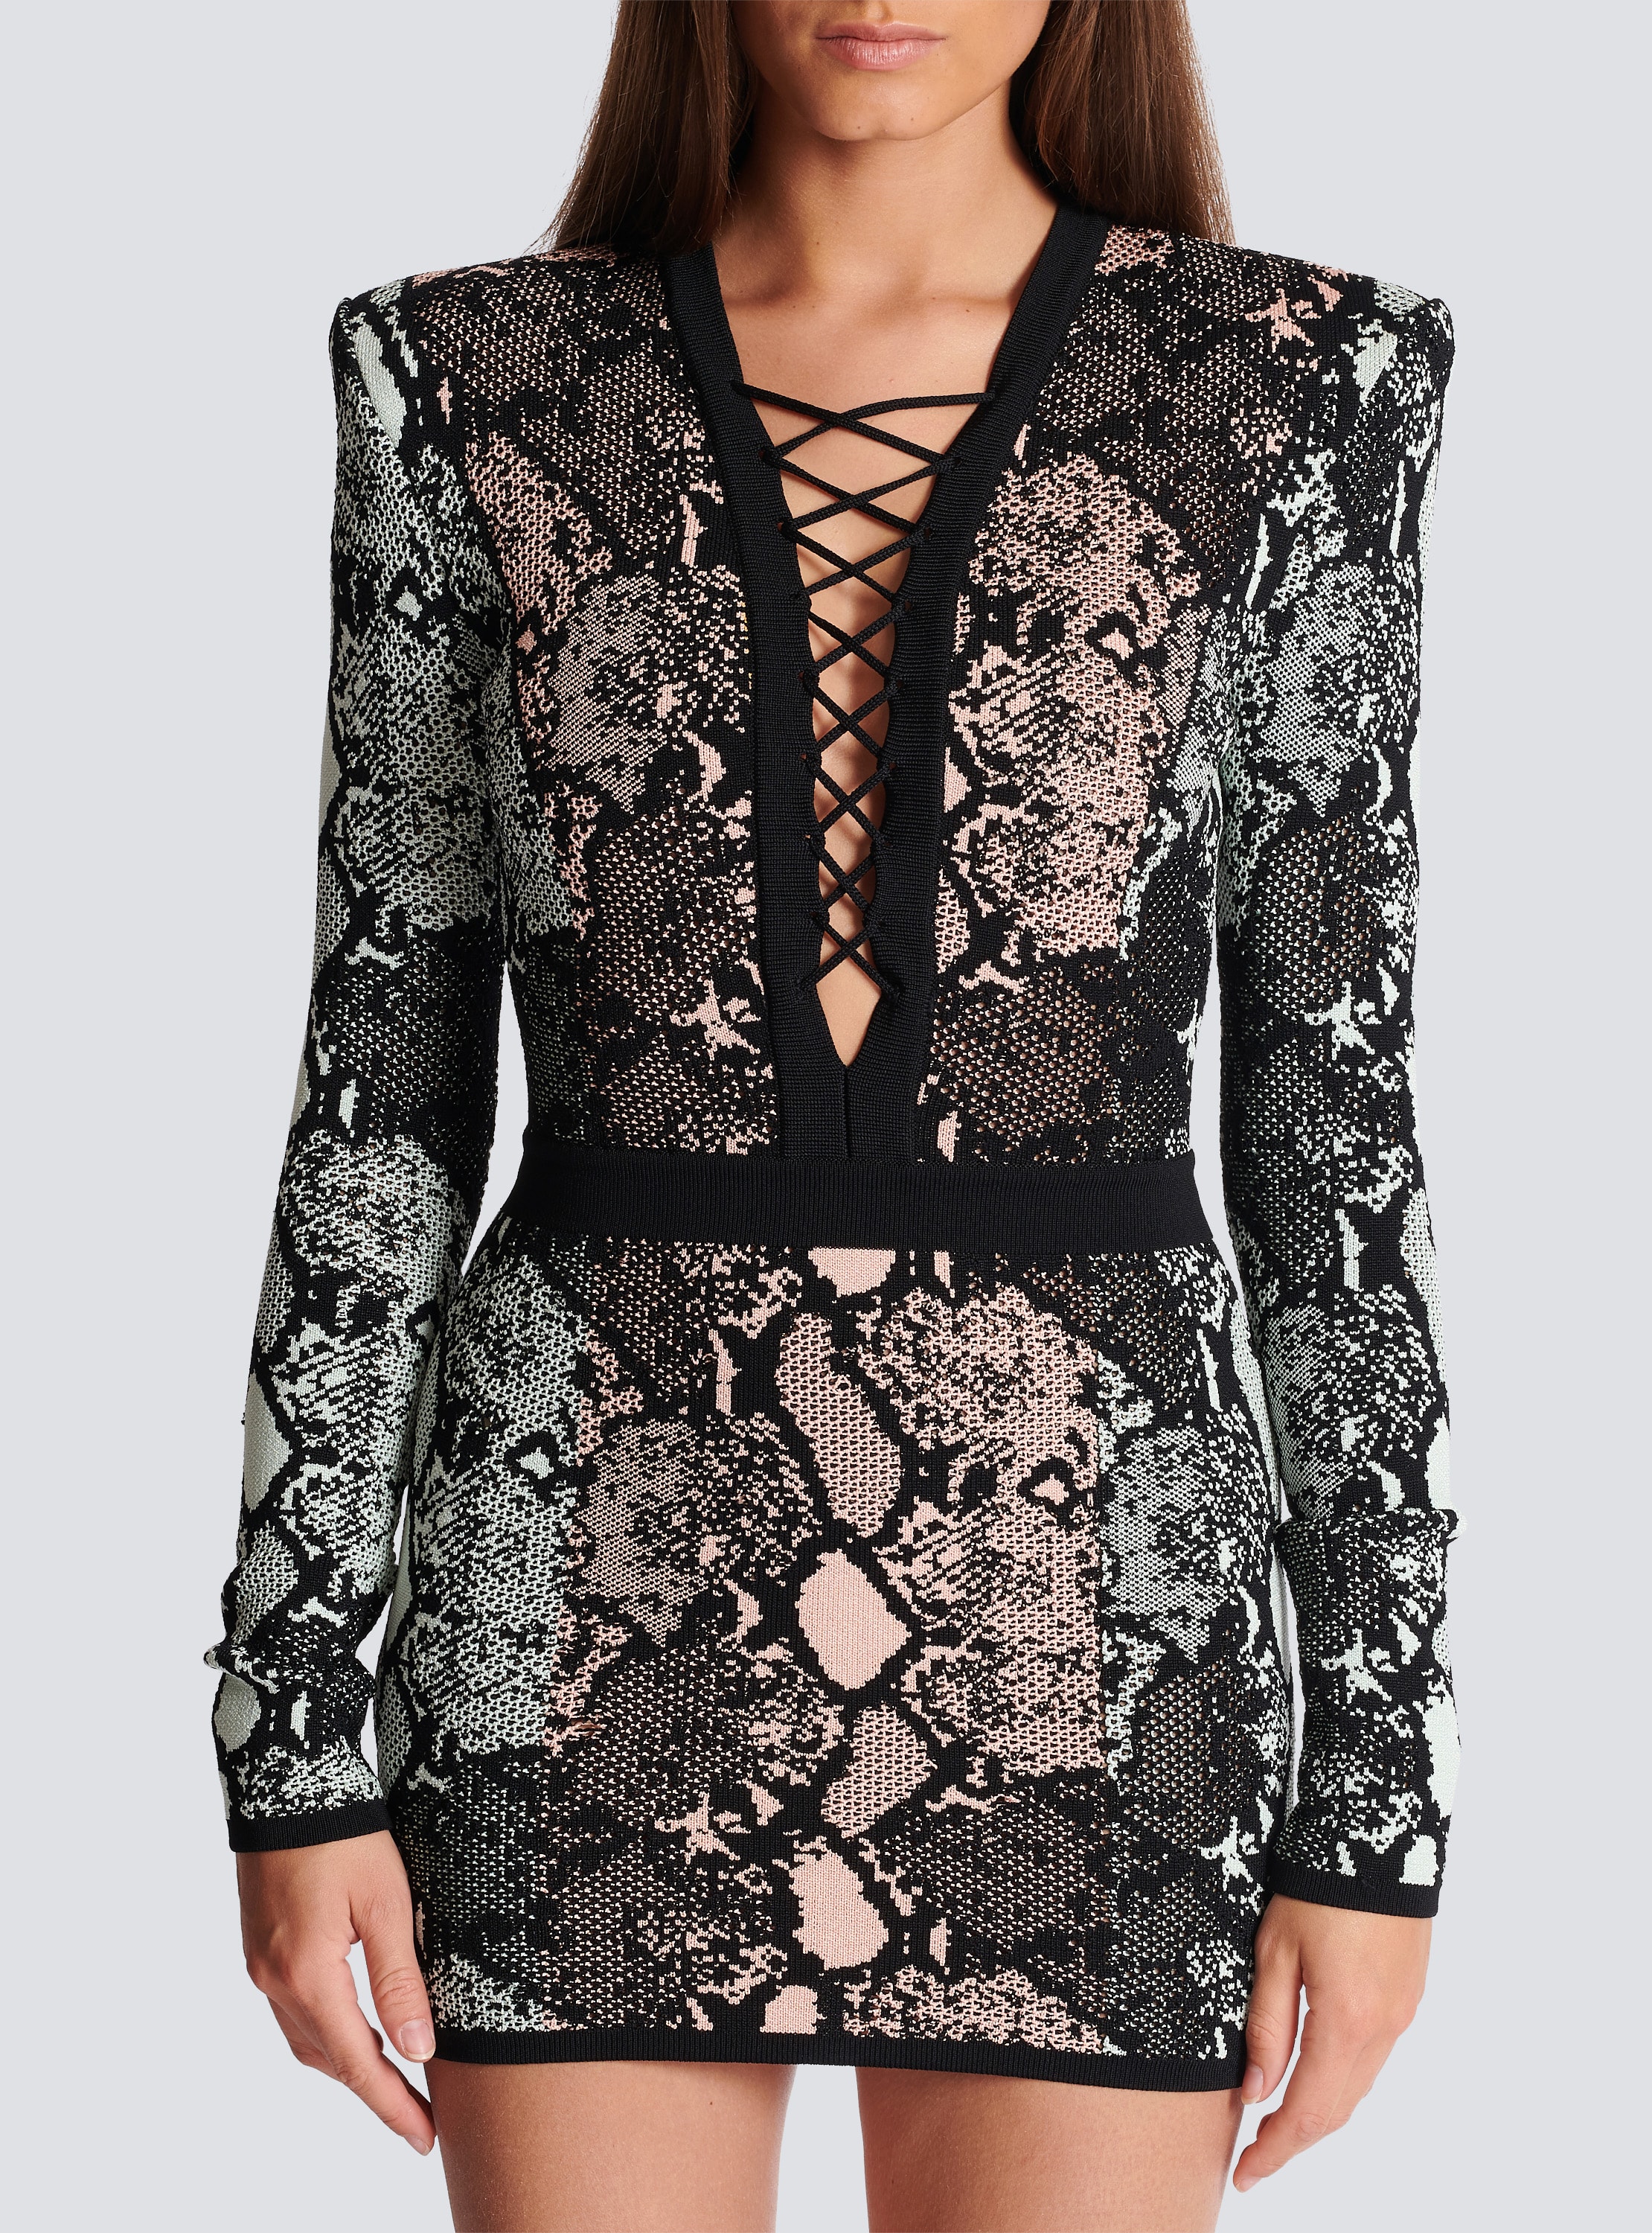 Short jacquard dress with black lace